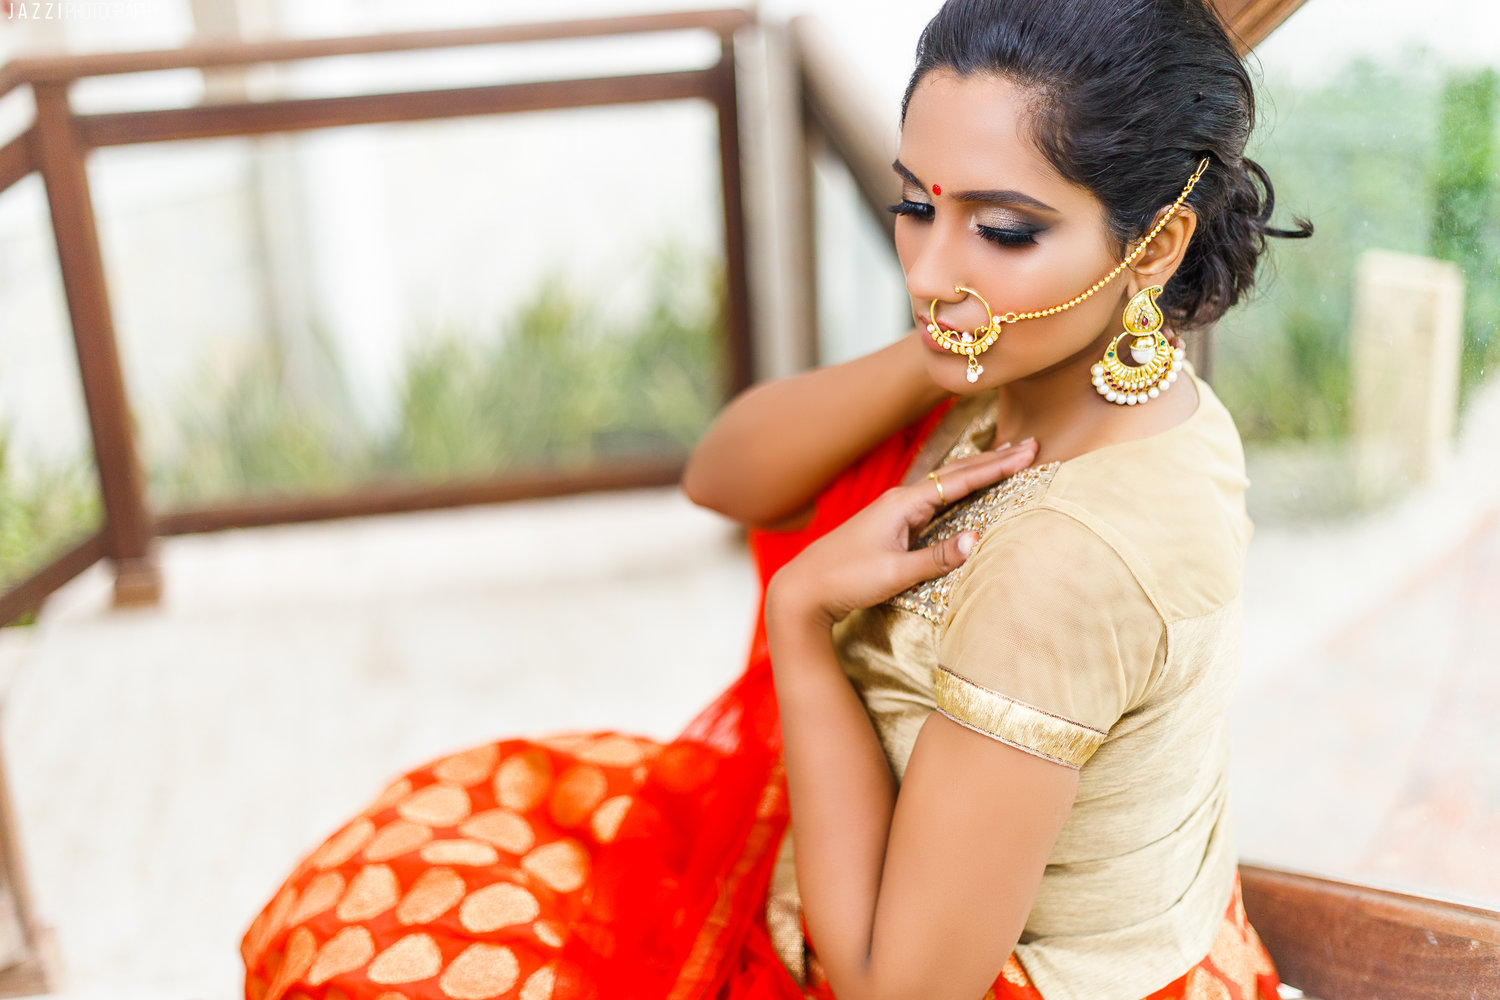 banana island — Works by Wedding Photographer in Chennai - Tamil Nadu -  India - Candid Wedding Photographer Chennai, Coimbatore.